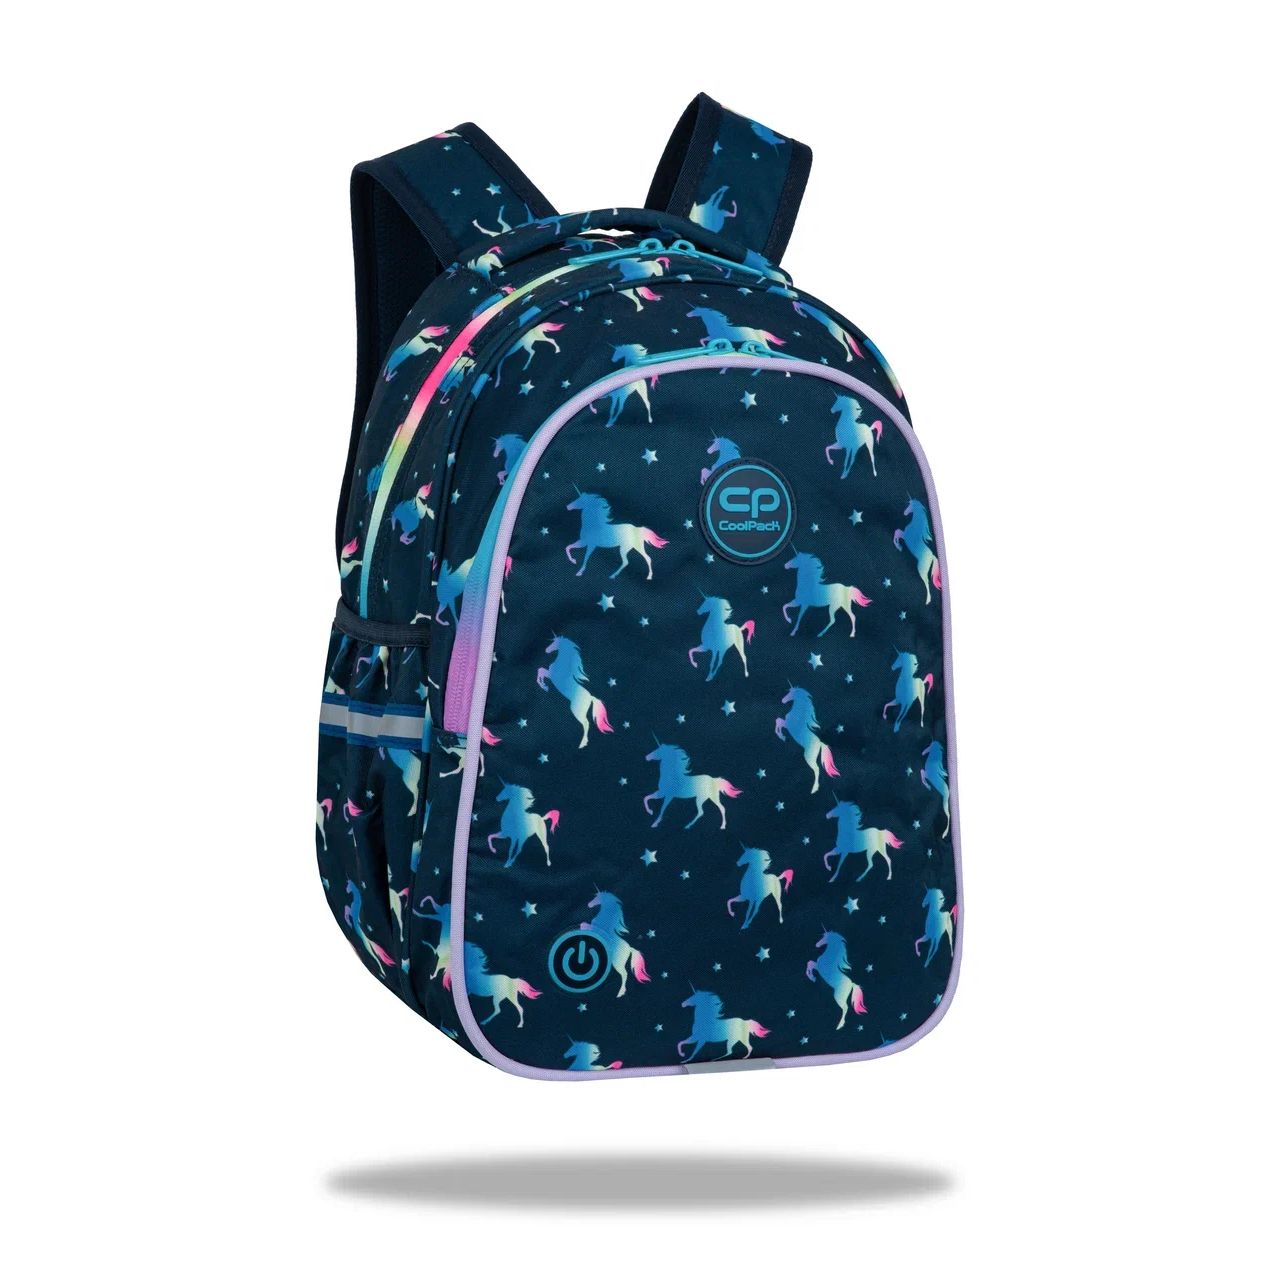 Рюкзак школьный Сool Pack LED, 39х28х17 см, 2 отделения, светодиодная подсветка рюкзак школьный сool pack spiner termic fancy stars 41х30х13 см 24 л 3 отделения